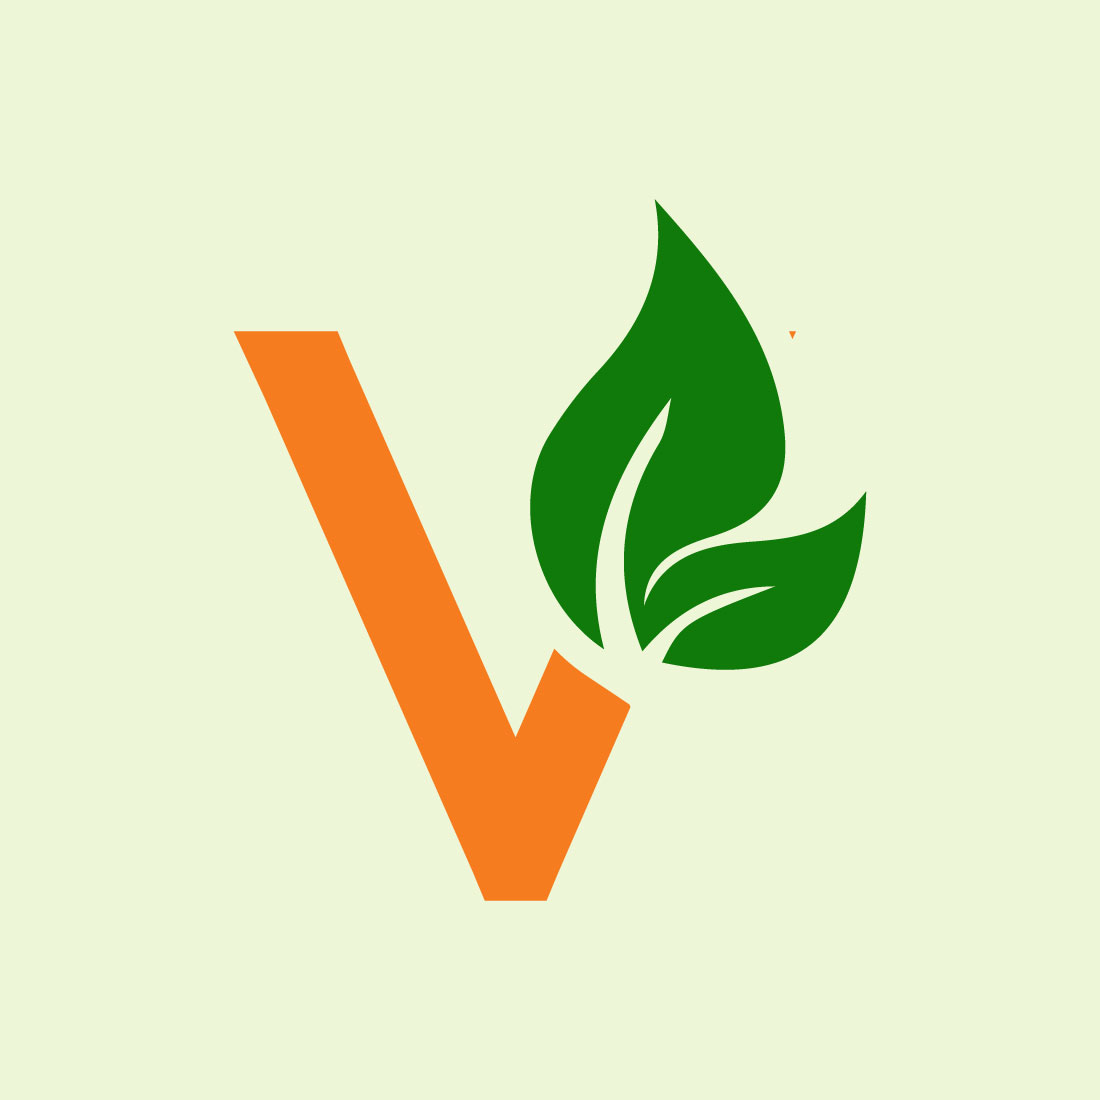 Free V typography logo cover image.